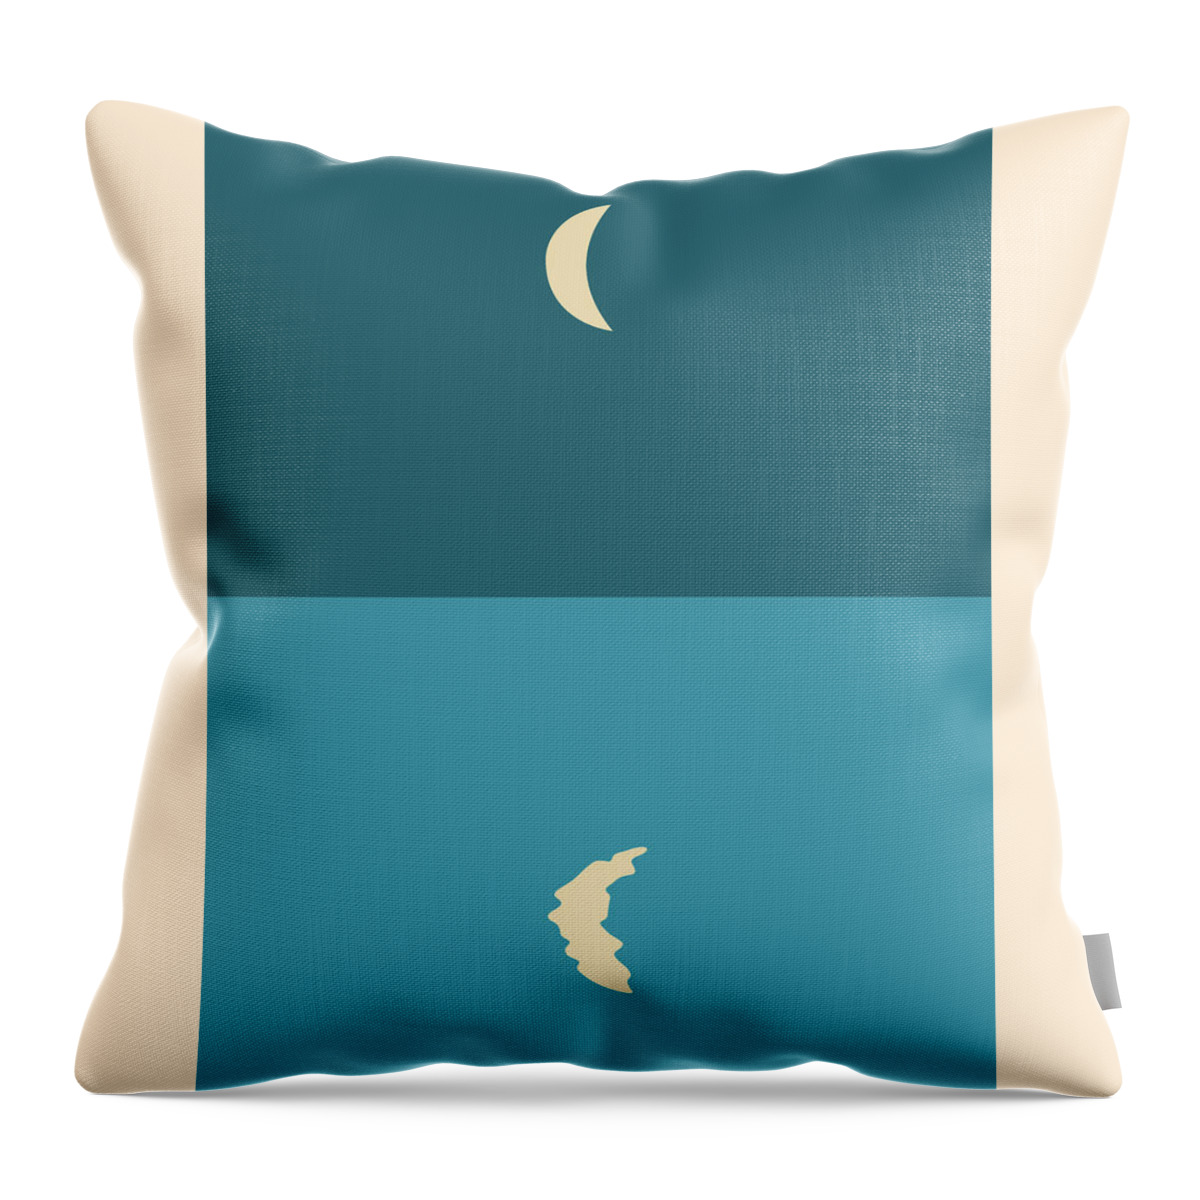 Moon Throw Pillow featuring the mixed media Minimal Crescent Moon Reflection - Modern, Contemporary Abstract Print - Zen, Contemplative - Blue by Studio Grafiikka